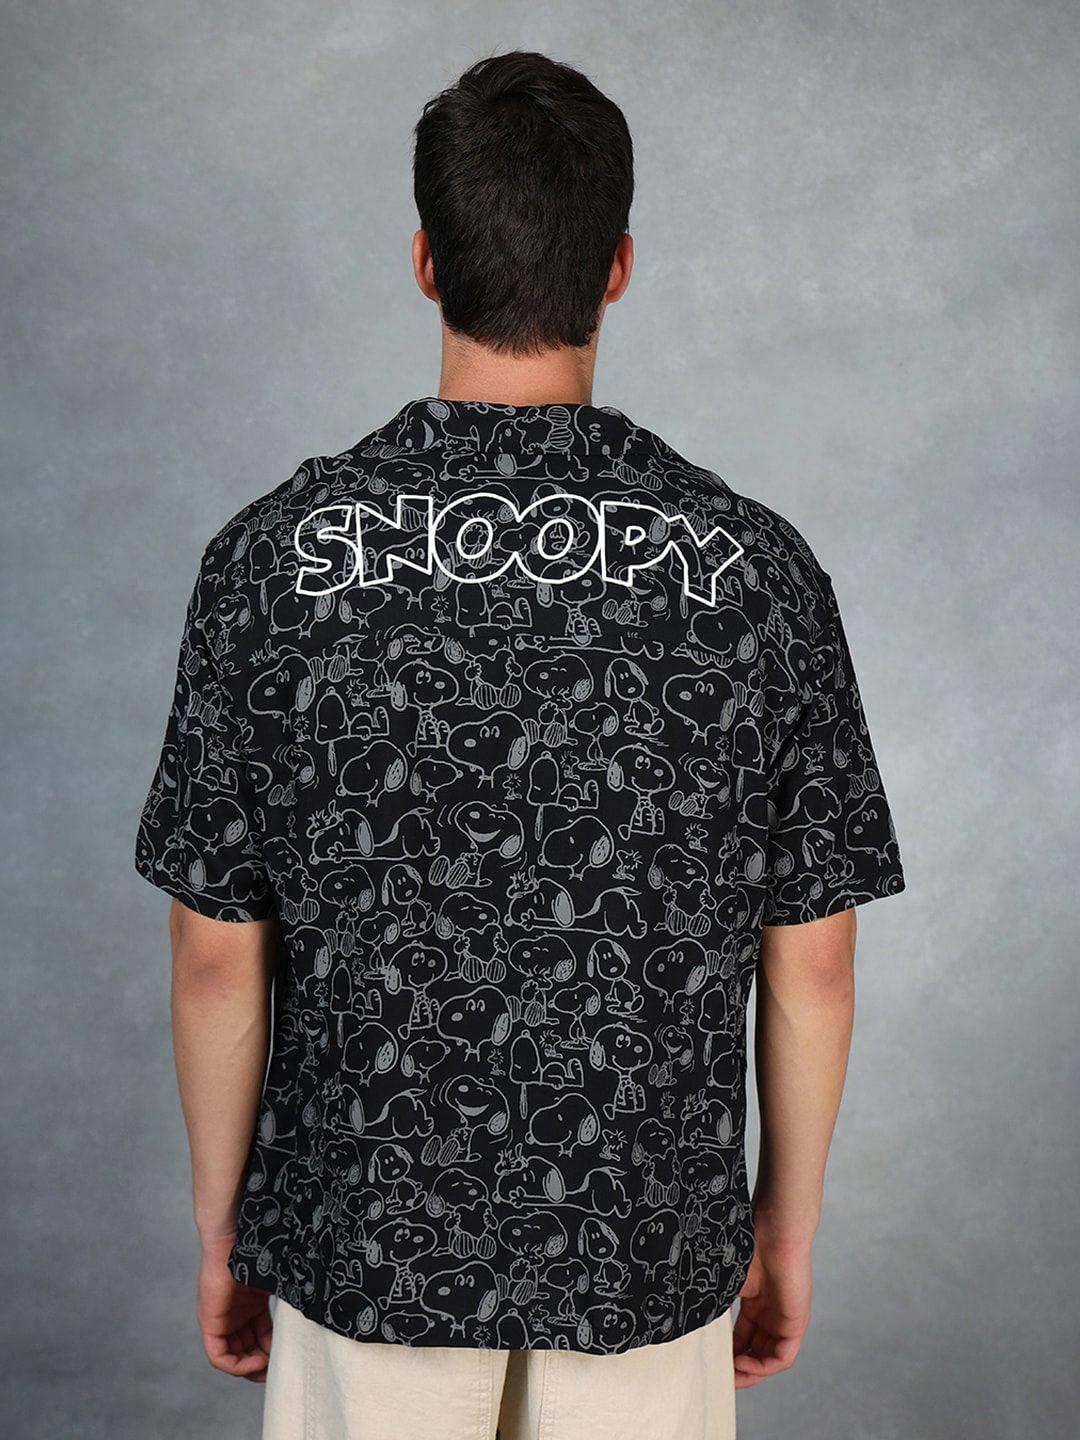 Bewakoof Black Original Oversized Snoopy Printed Spread Collar Short Sleeves Casual Shirt